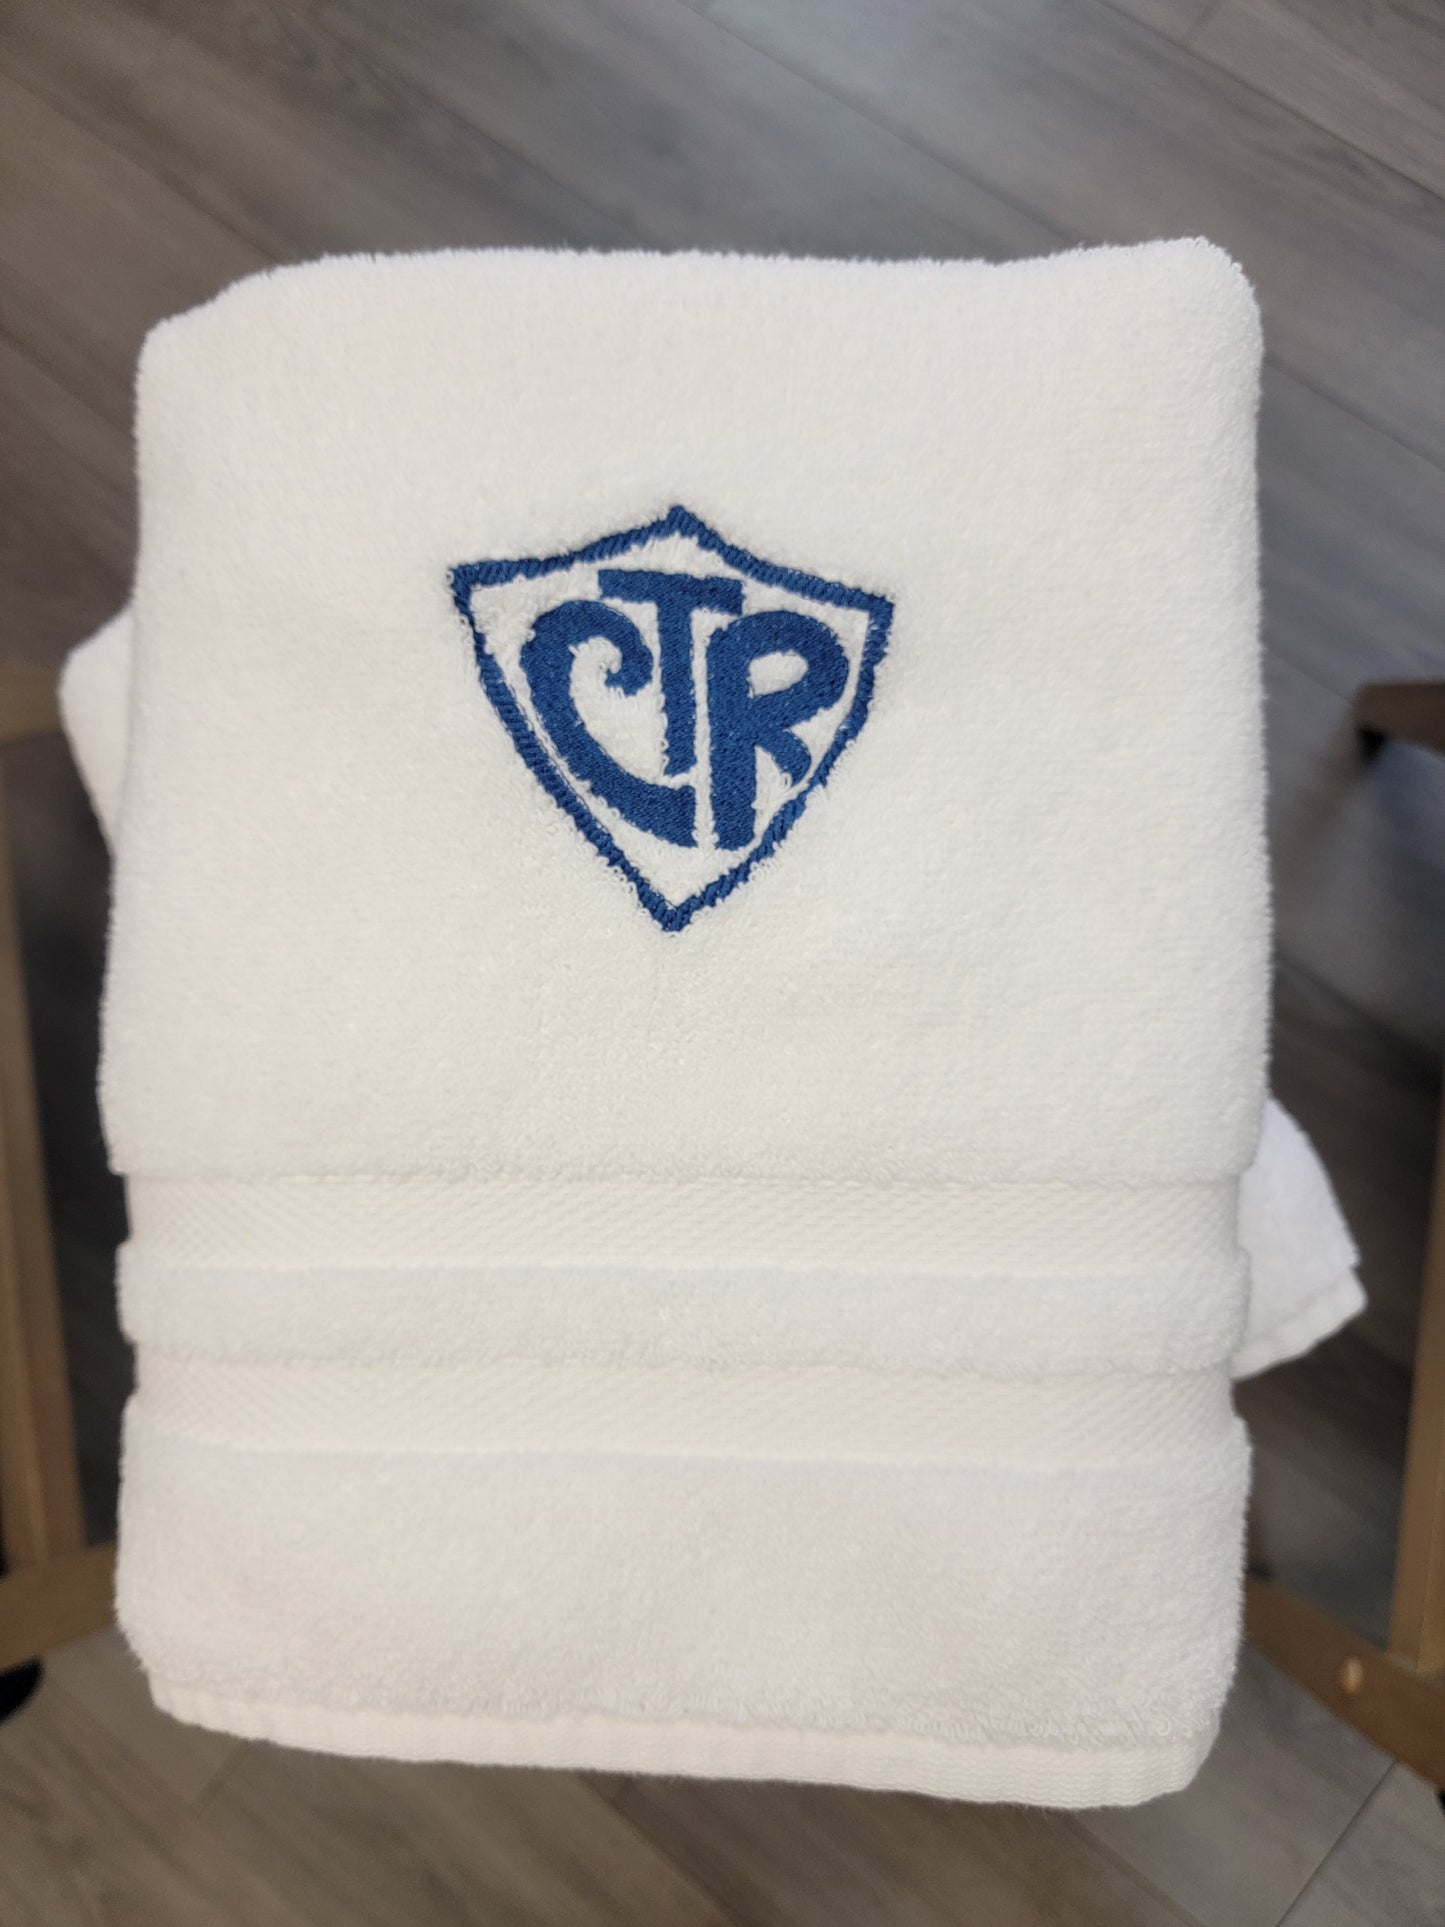 CTR Towel